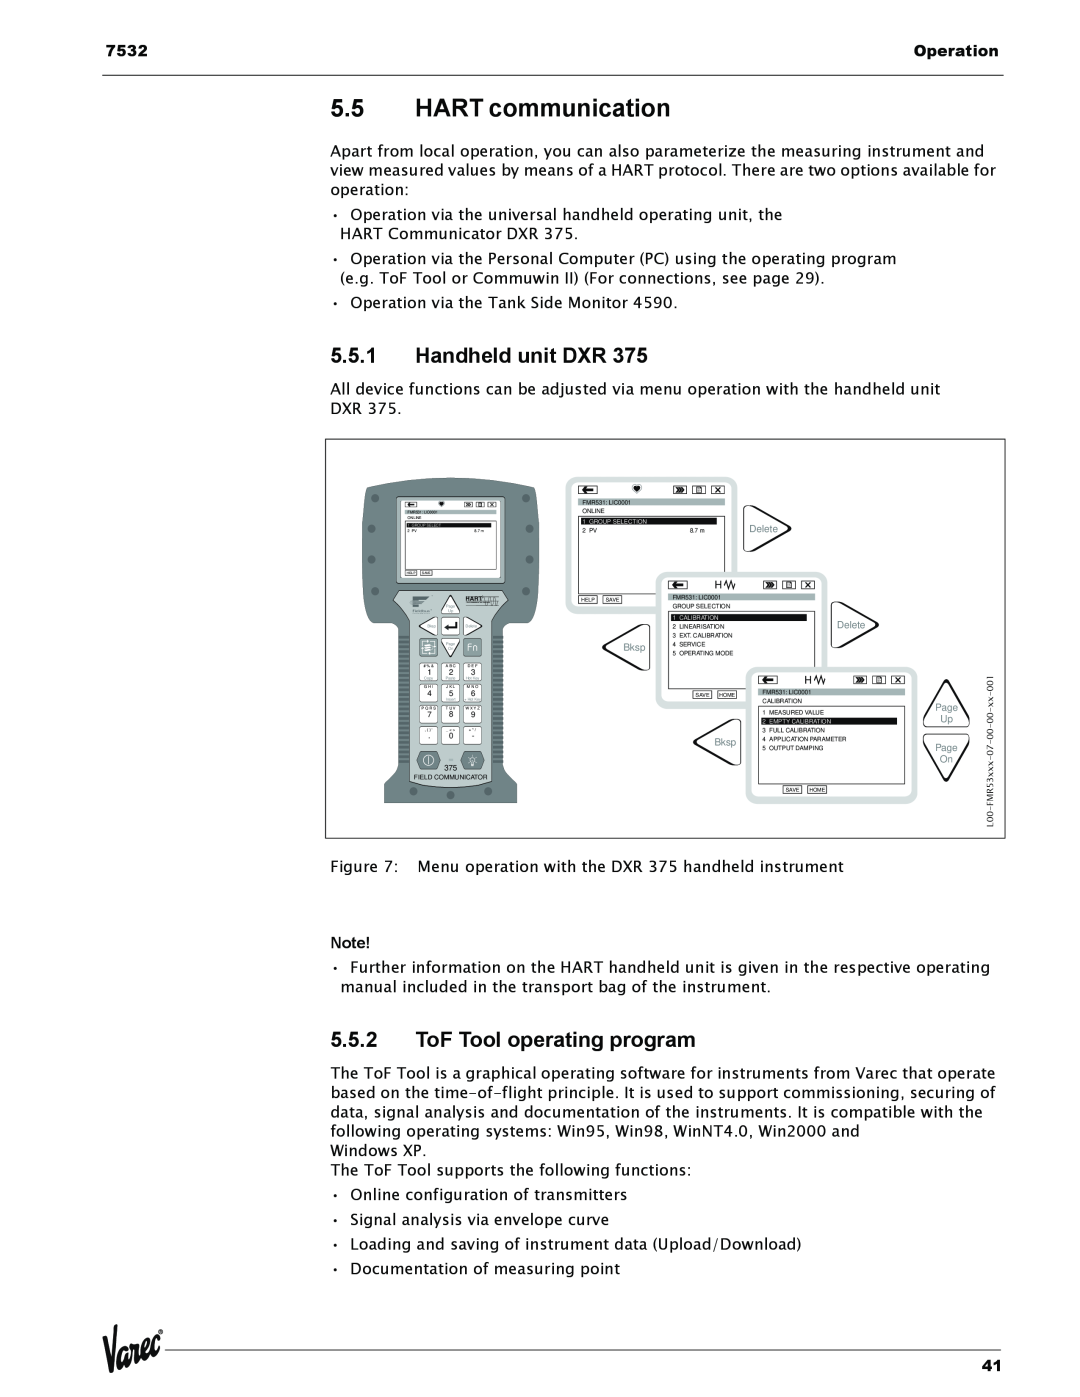 Lightning Audio 7532 manual 5.5HART communication, 5.5.1Handheld unit DXR, 5.5.2ToF Tool operating program, Operation 